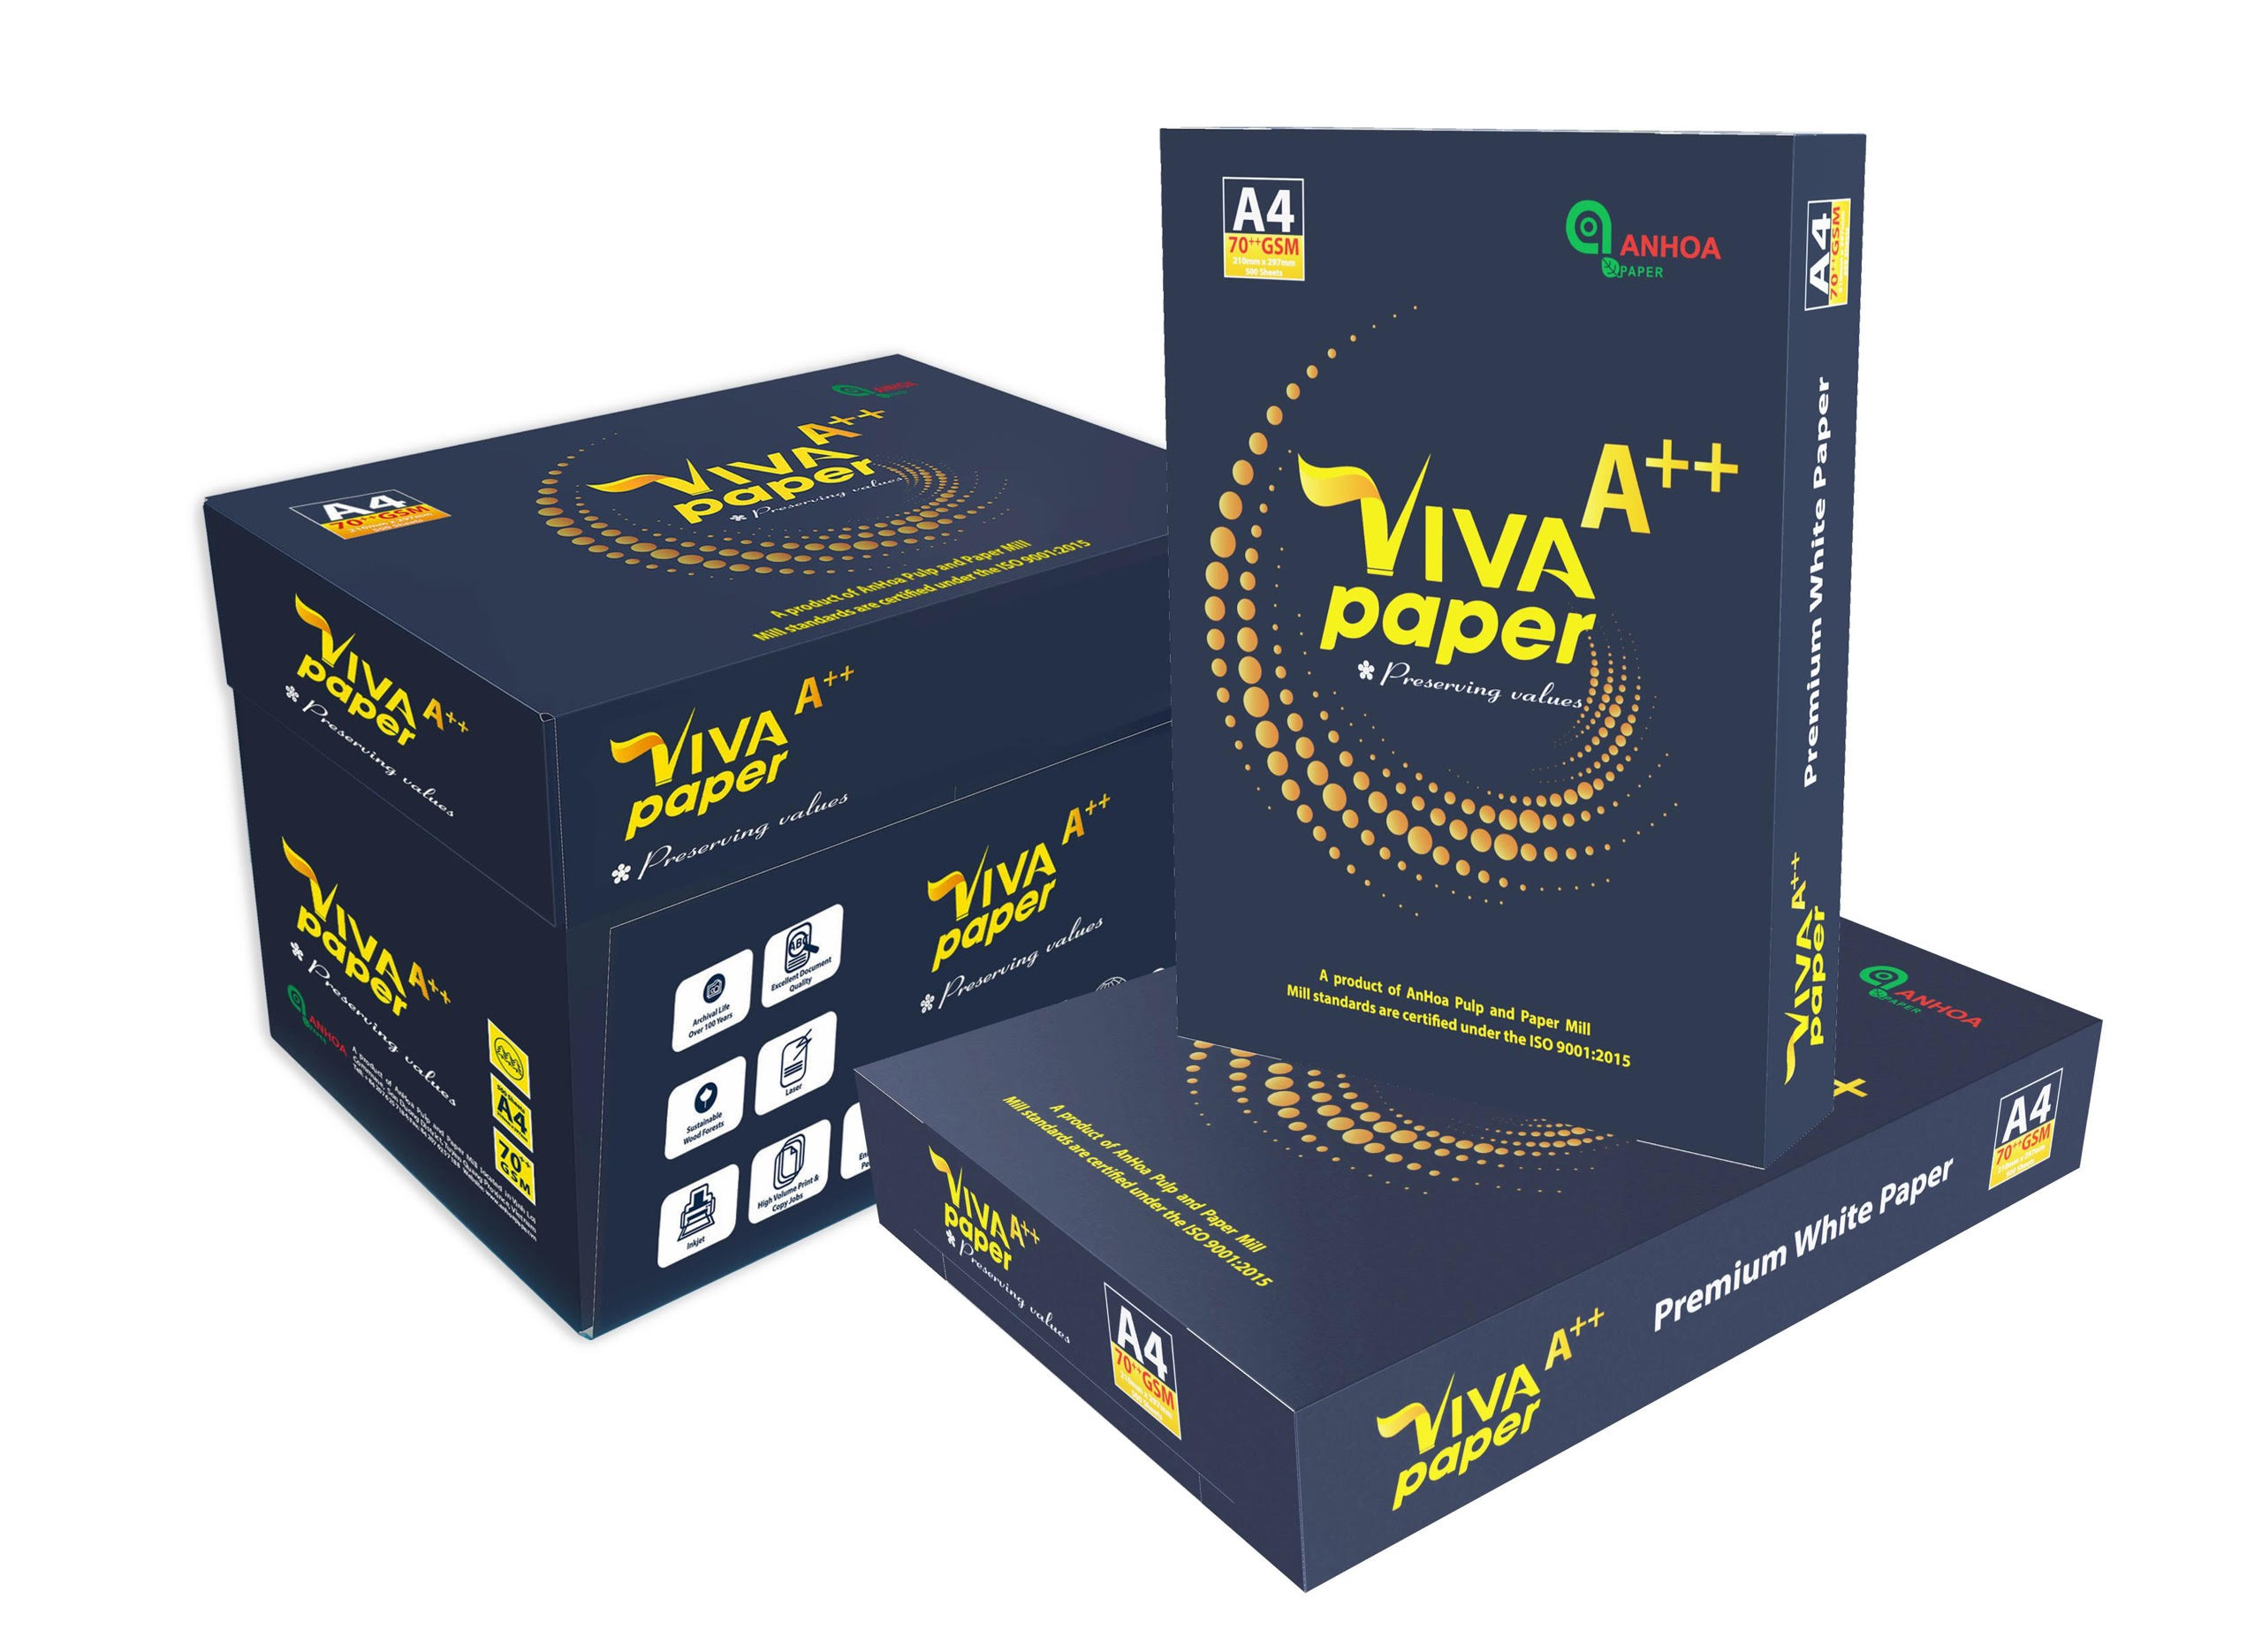 Giấy thùng VIVA A++